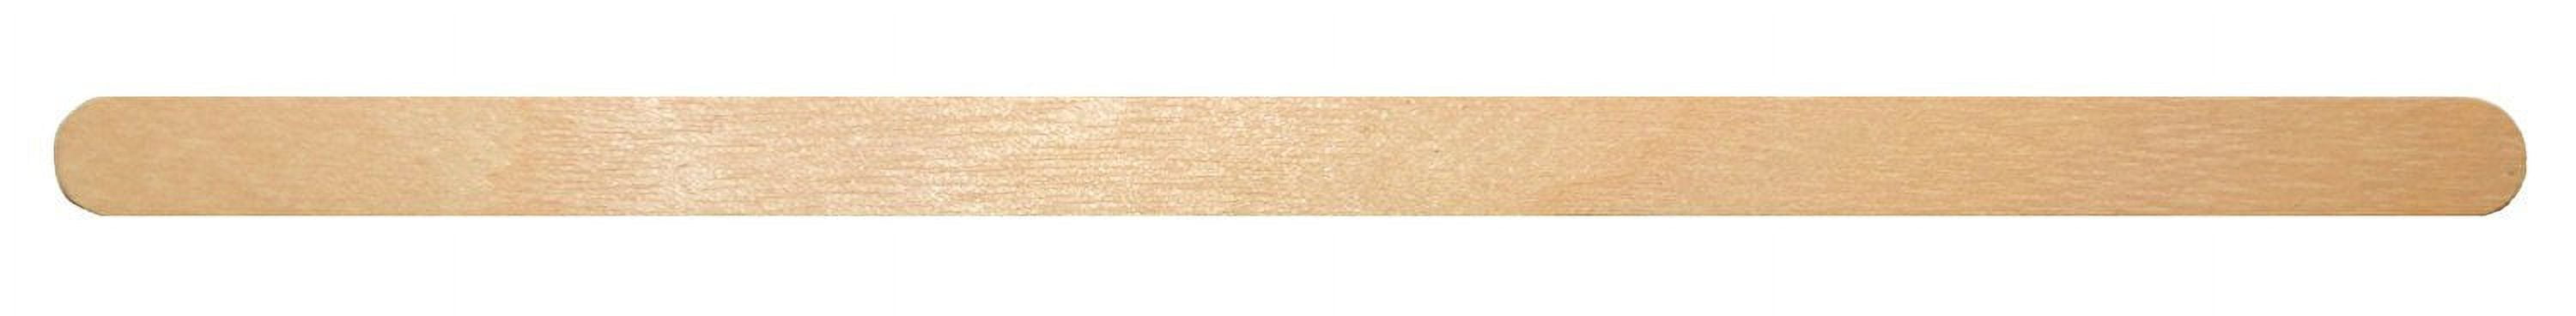  Perfect Stix - FS202-1000 Wooden Coffee Stirrer Stix, 7 Length  (Pack of 1,000) : Home & Kitchen